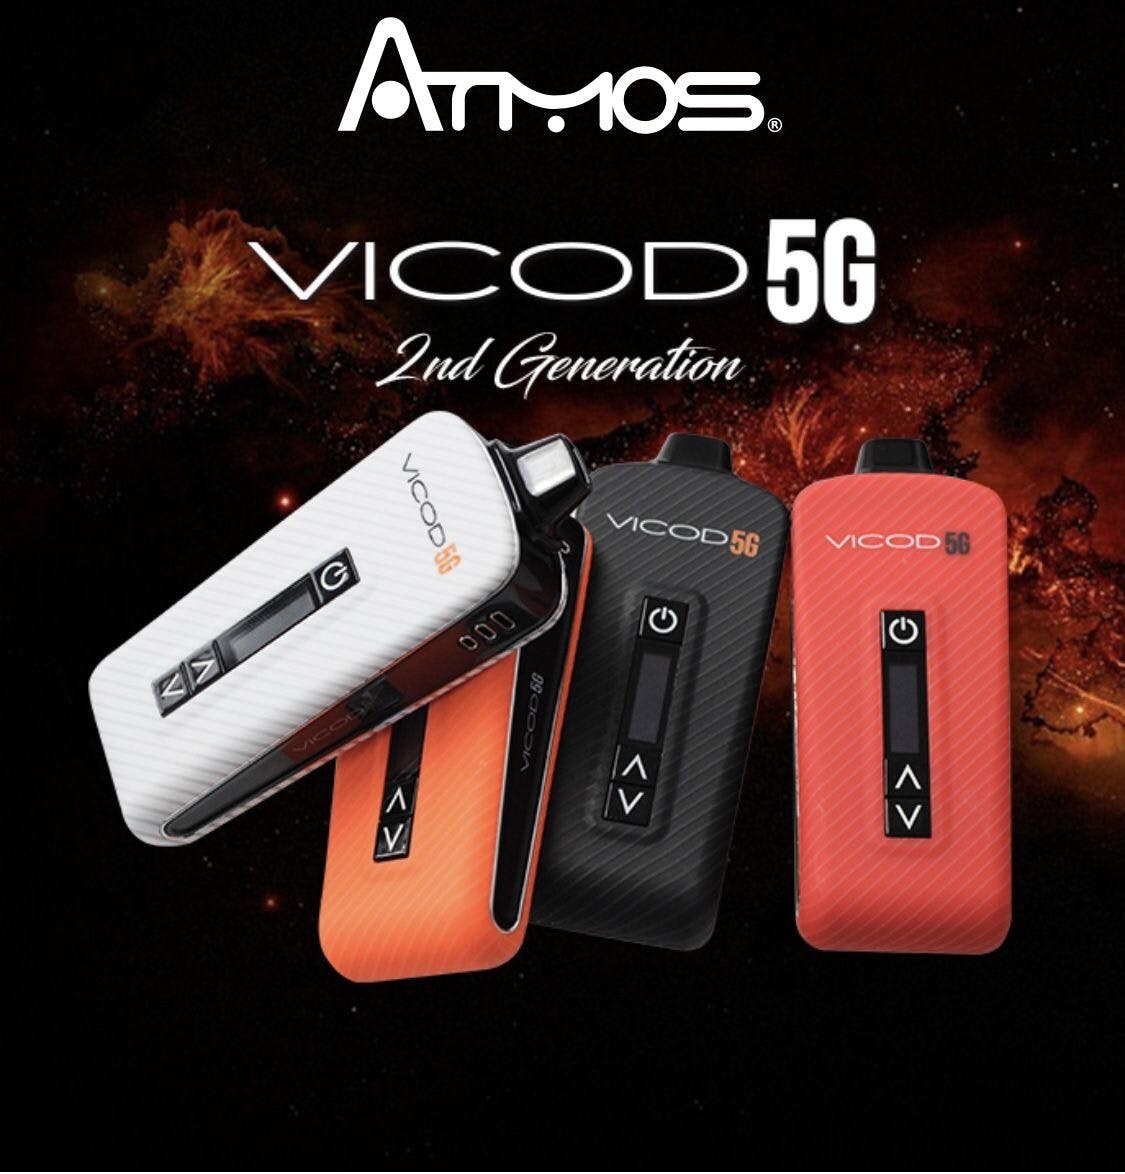 gear-atmos-vicod-5g-dry-herb-vaporizer